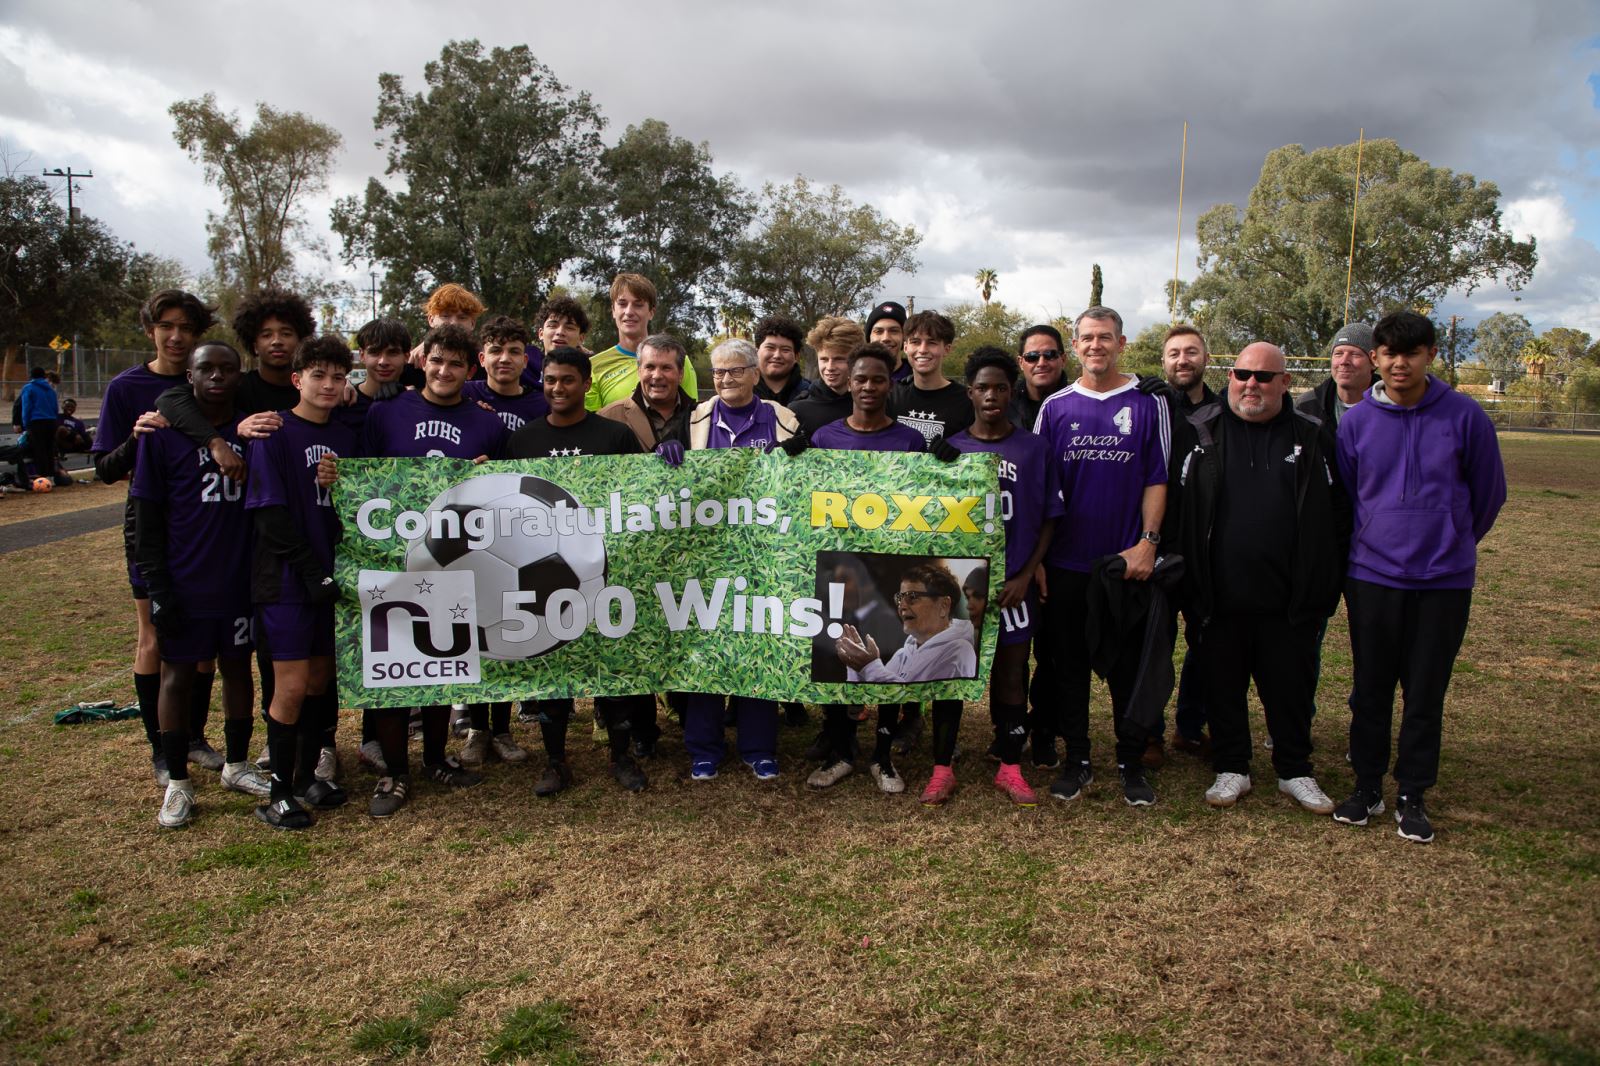 Soccer Team and celebration banner